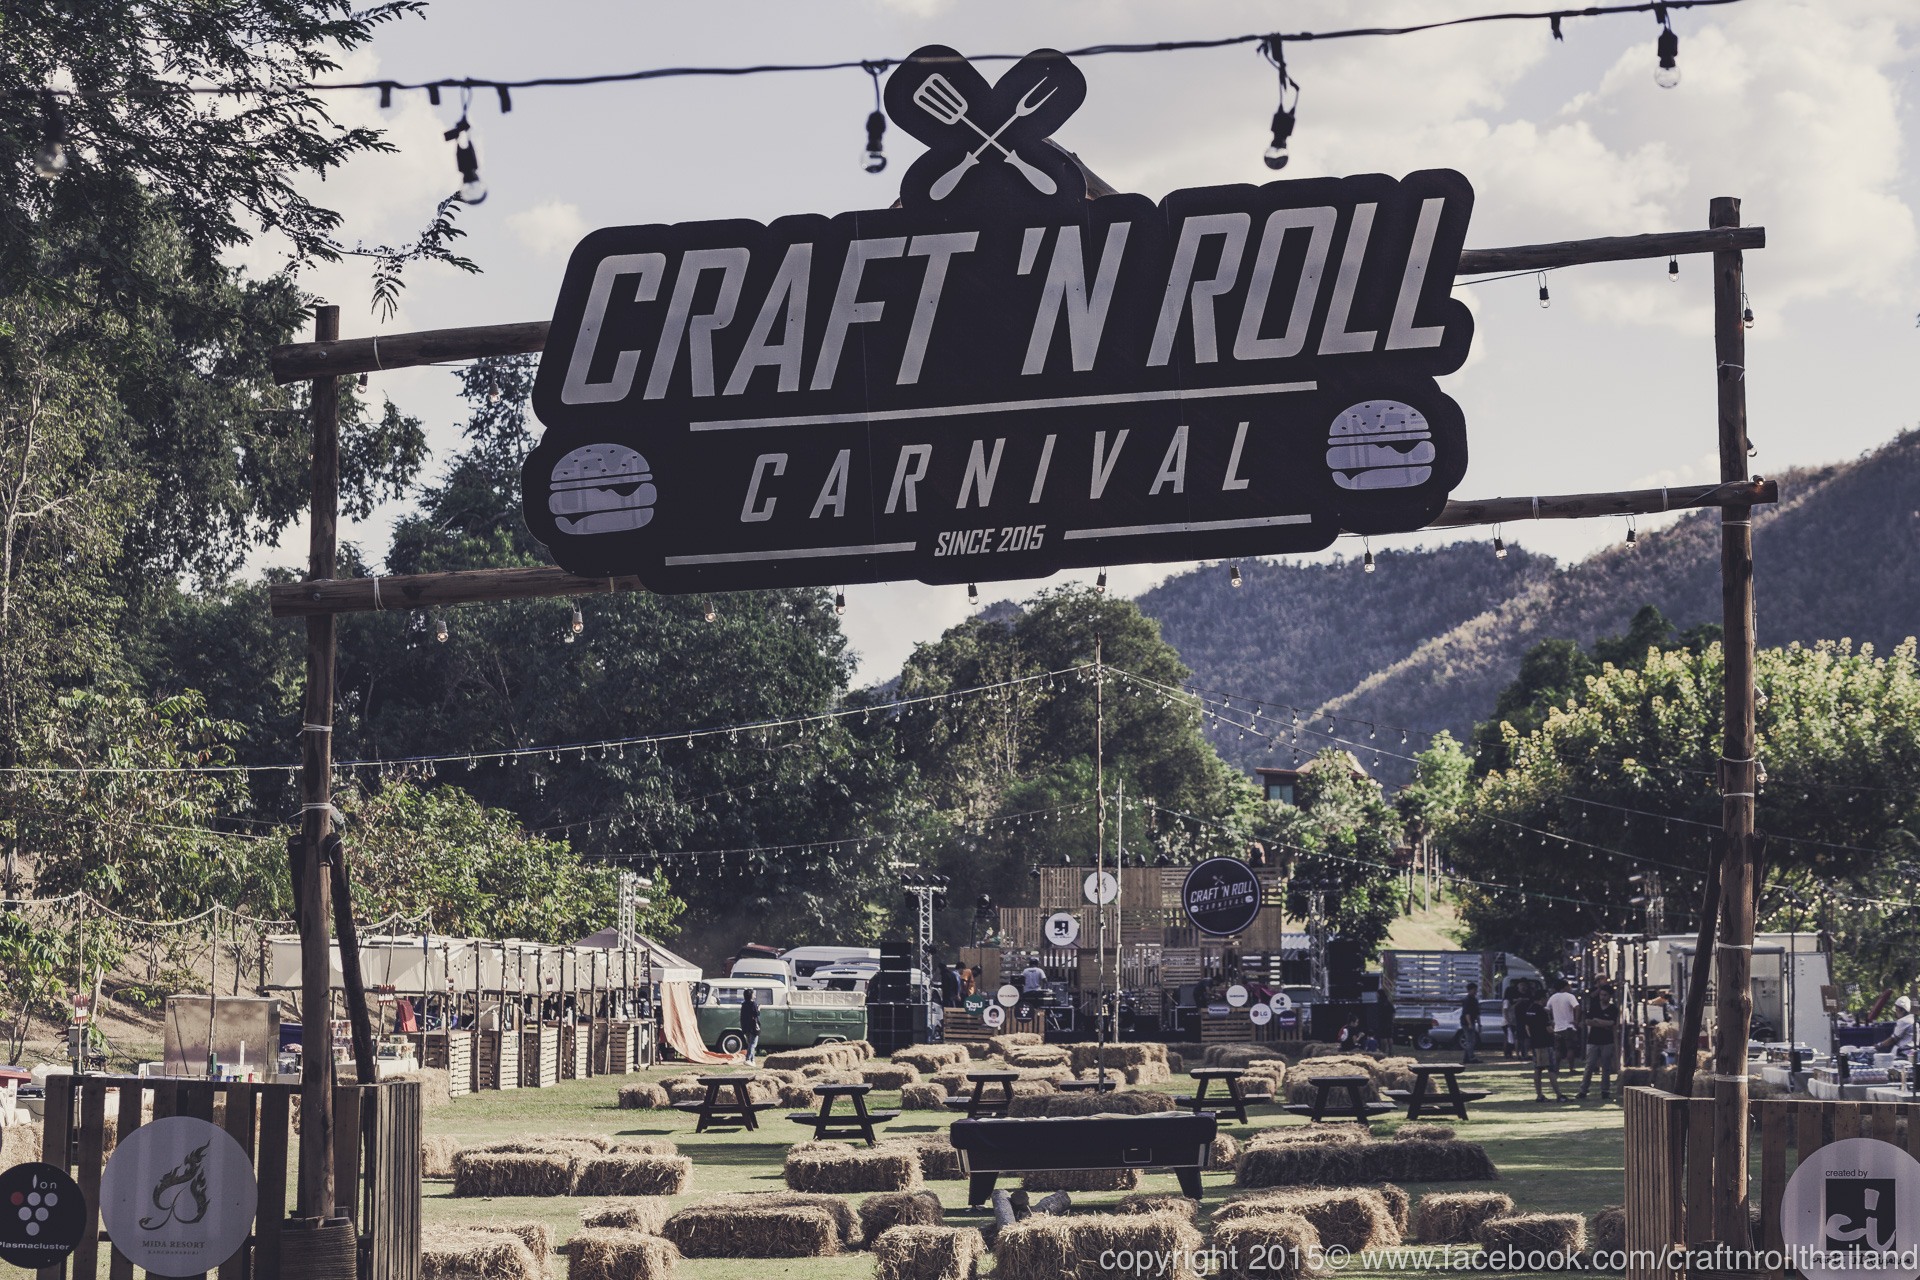 Craft'n Roll Carnival ครั้งแรกกับมิตรภาพดีๆ ในคอมมูนิตี้ เบียร์คราฟท์ ไทย